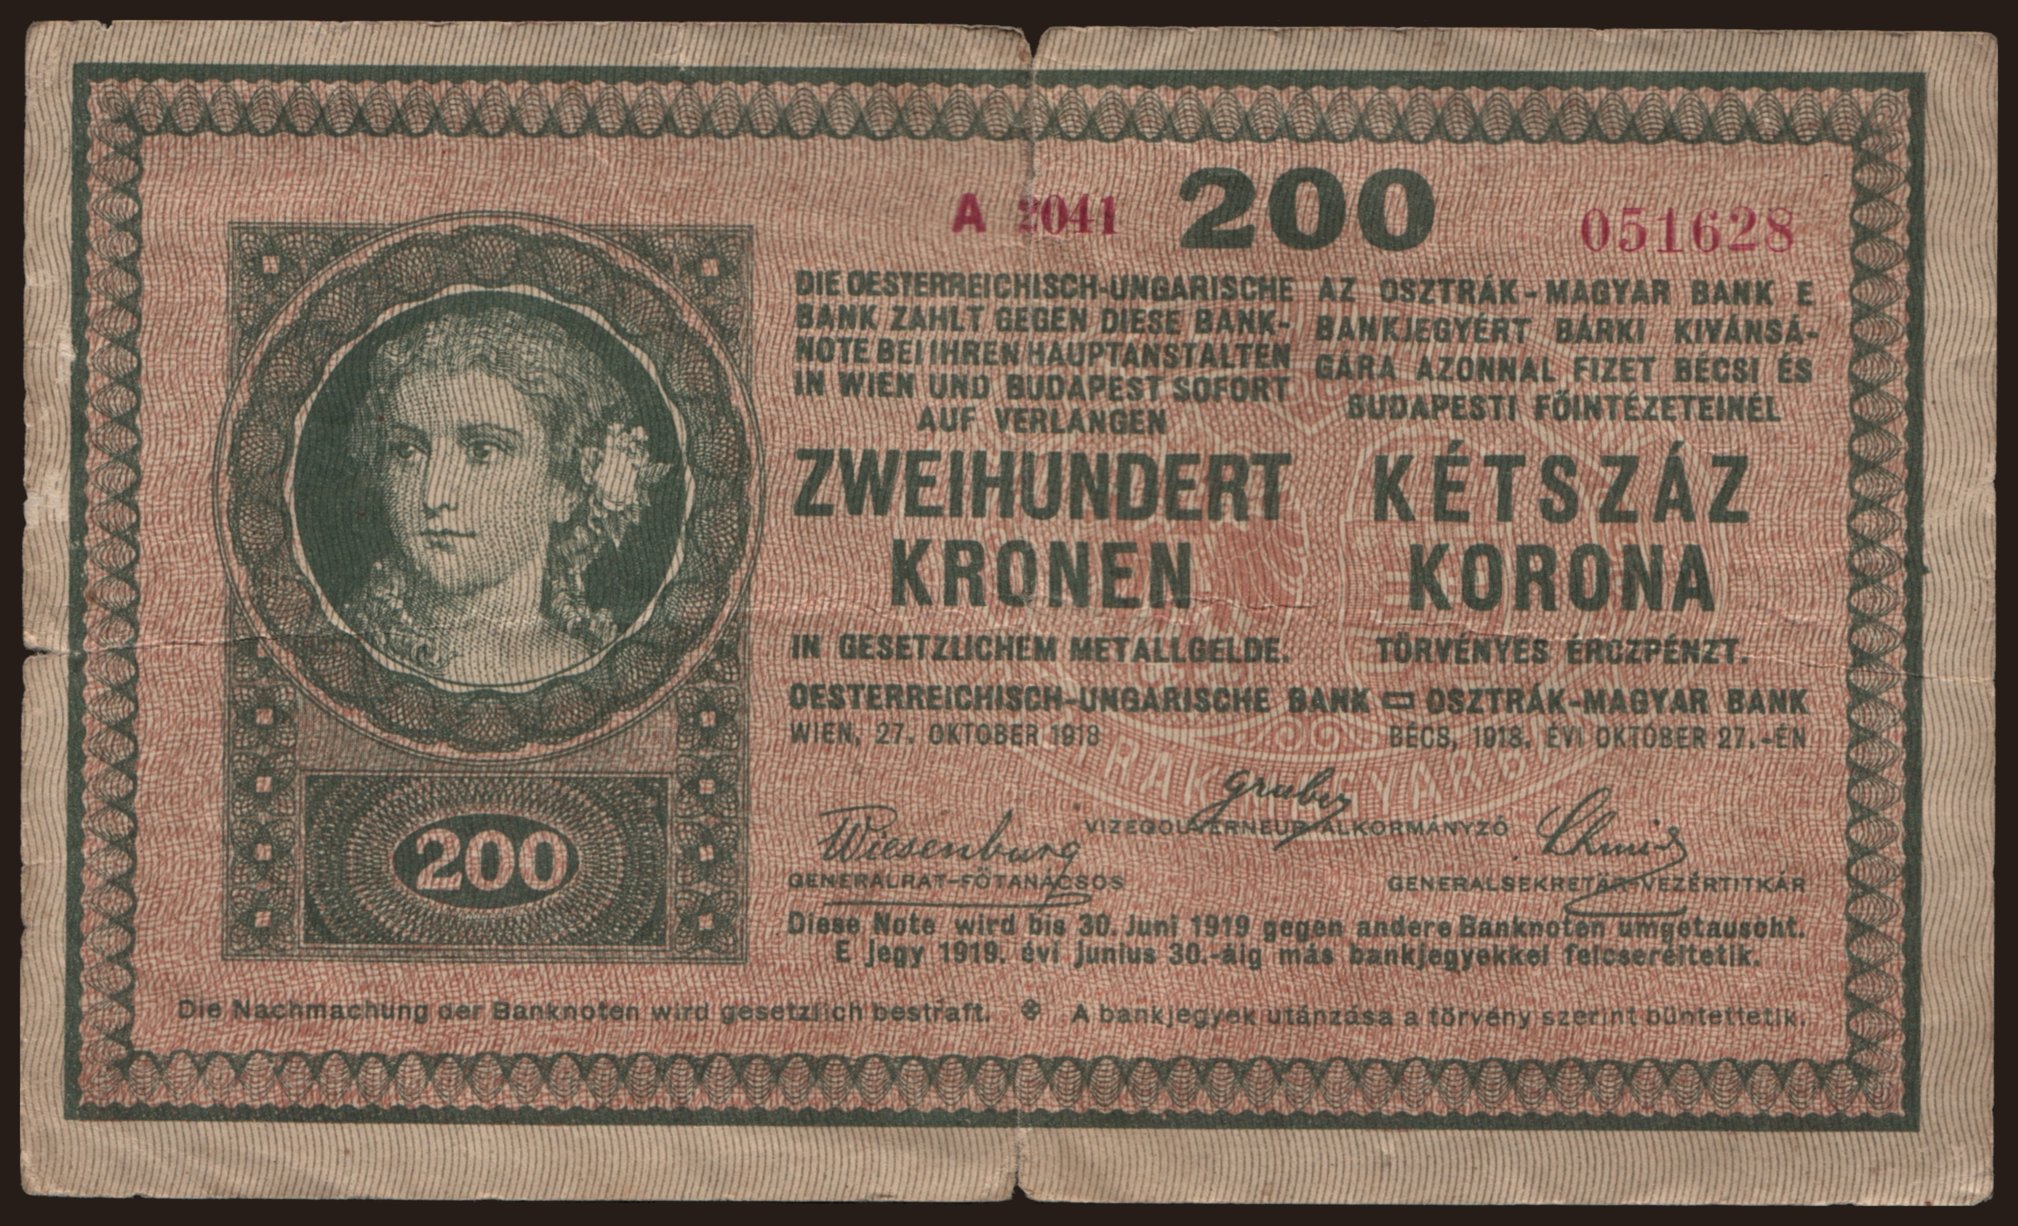 200 korona, 1918(19)